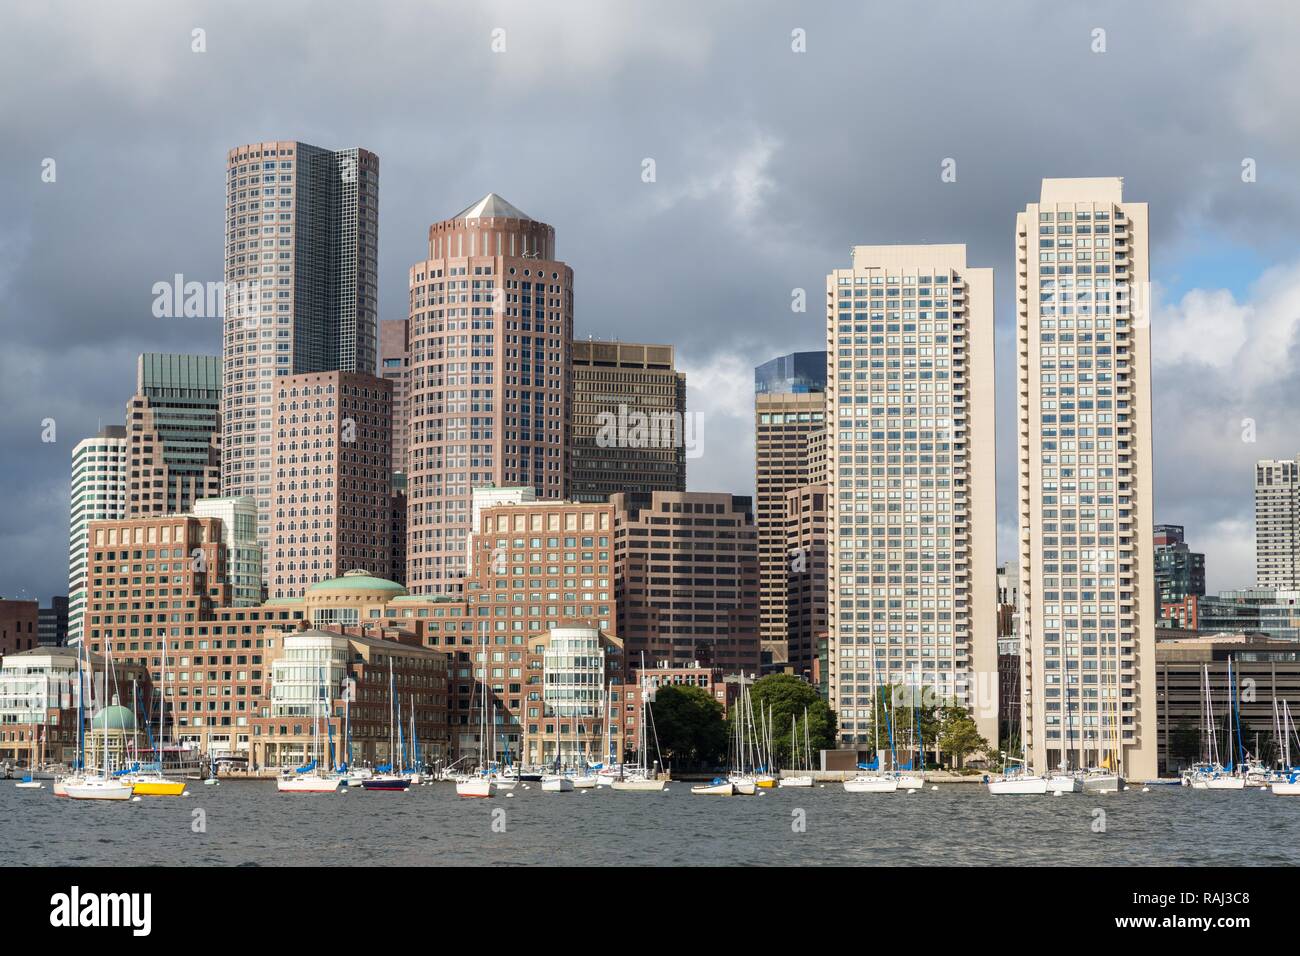 View of skyline of Boston, skyscrapers, in front sailboats on Boston Main Channel, Boston, Massachusetts, USA Stock Photo